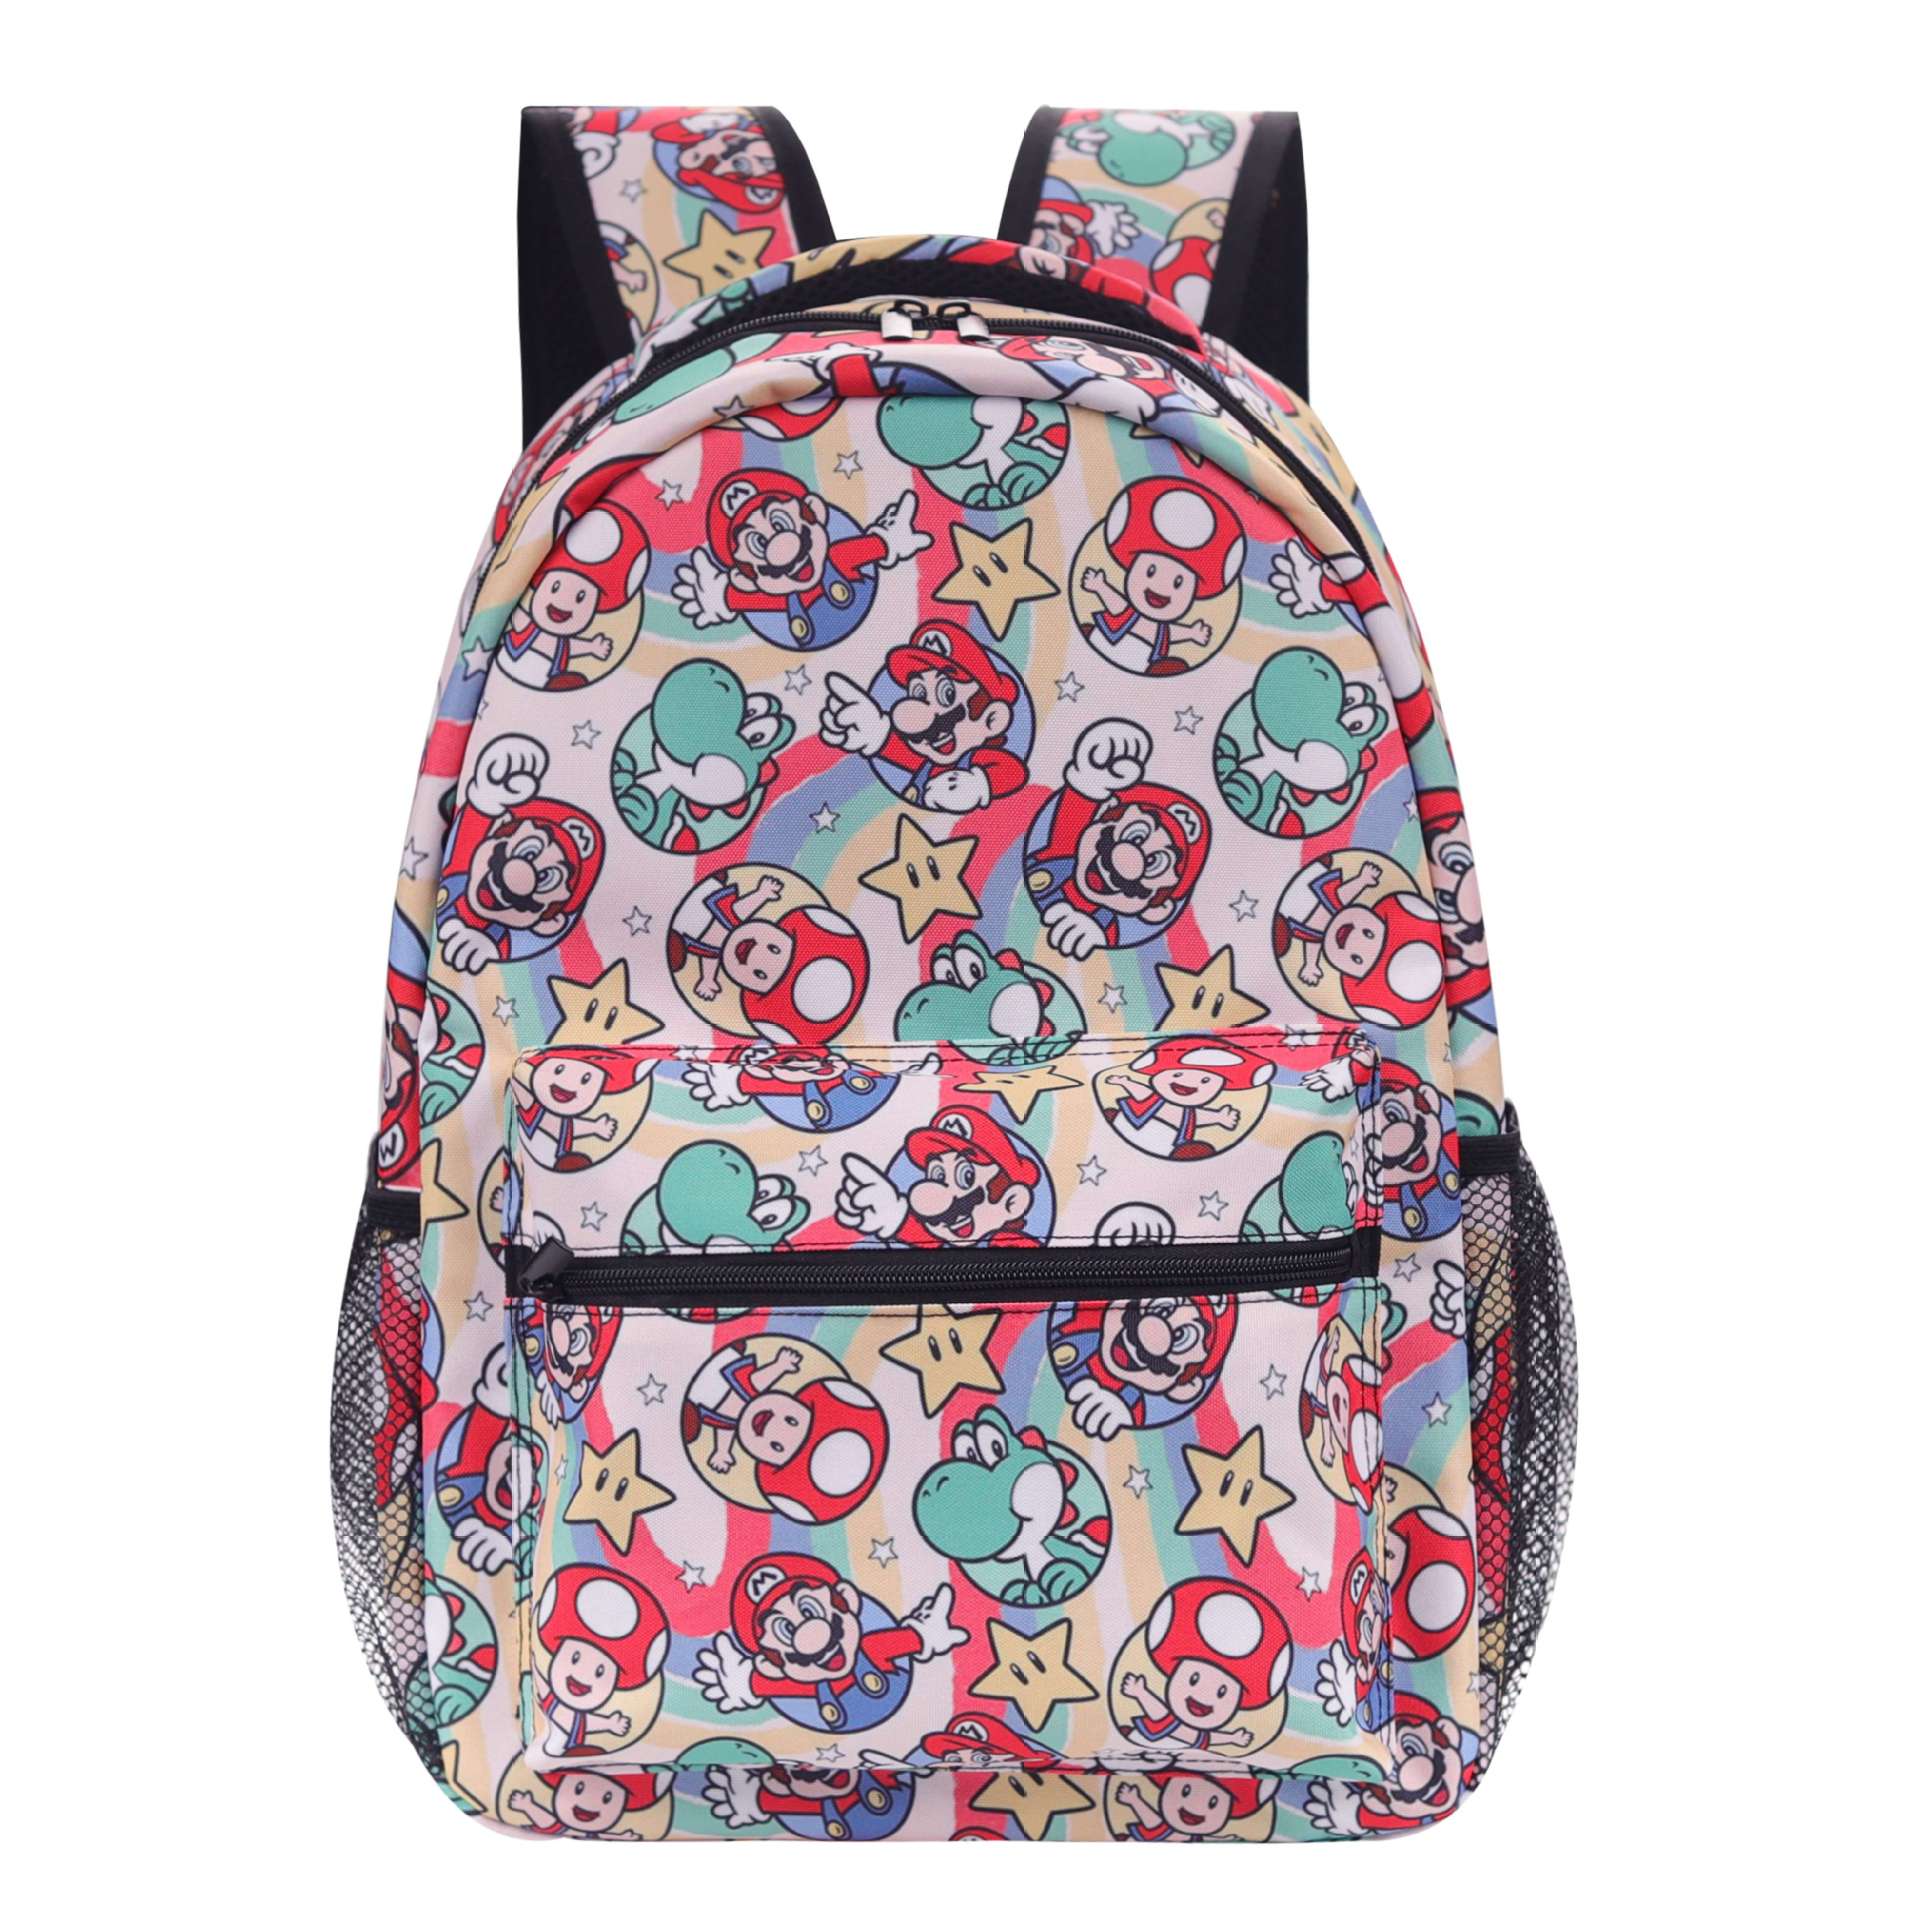 Super Mario Backpack for Kids Girl's Super Mario School Backpack Ideal Present